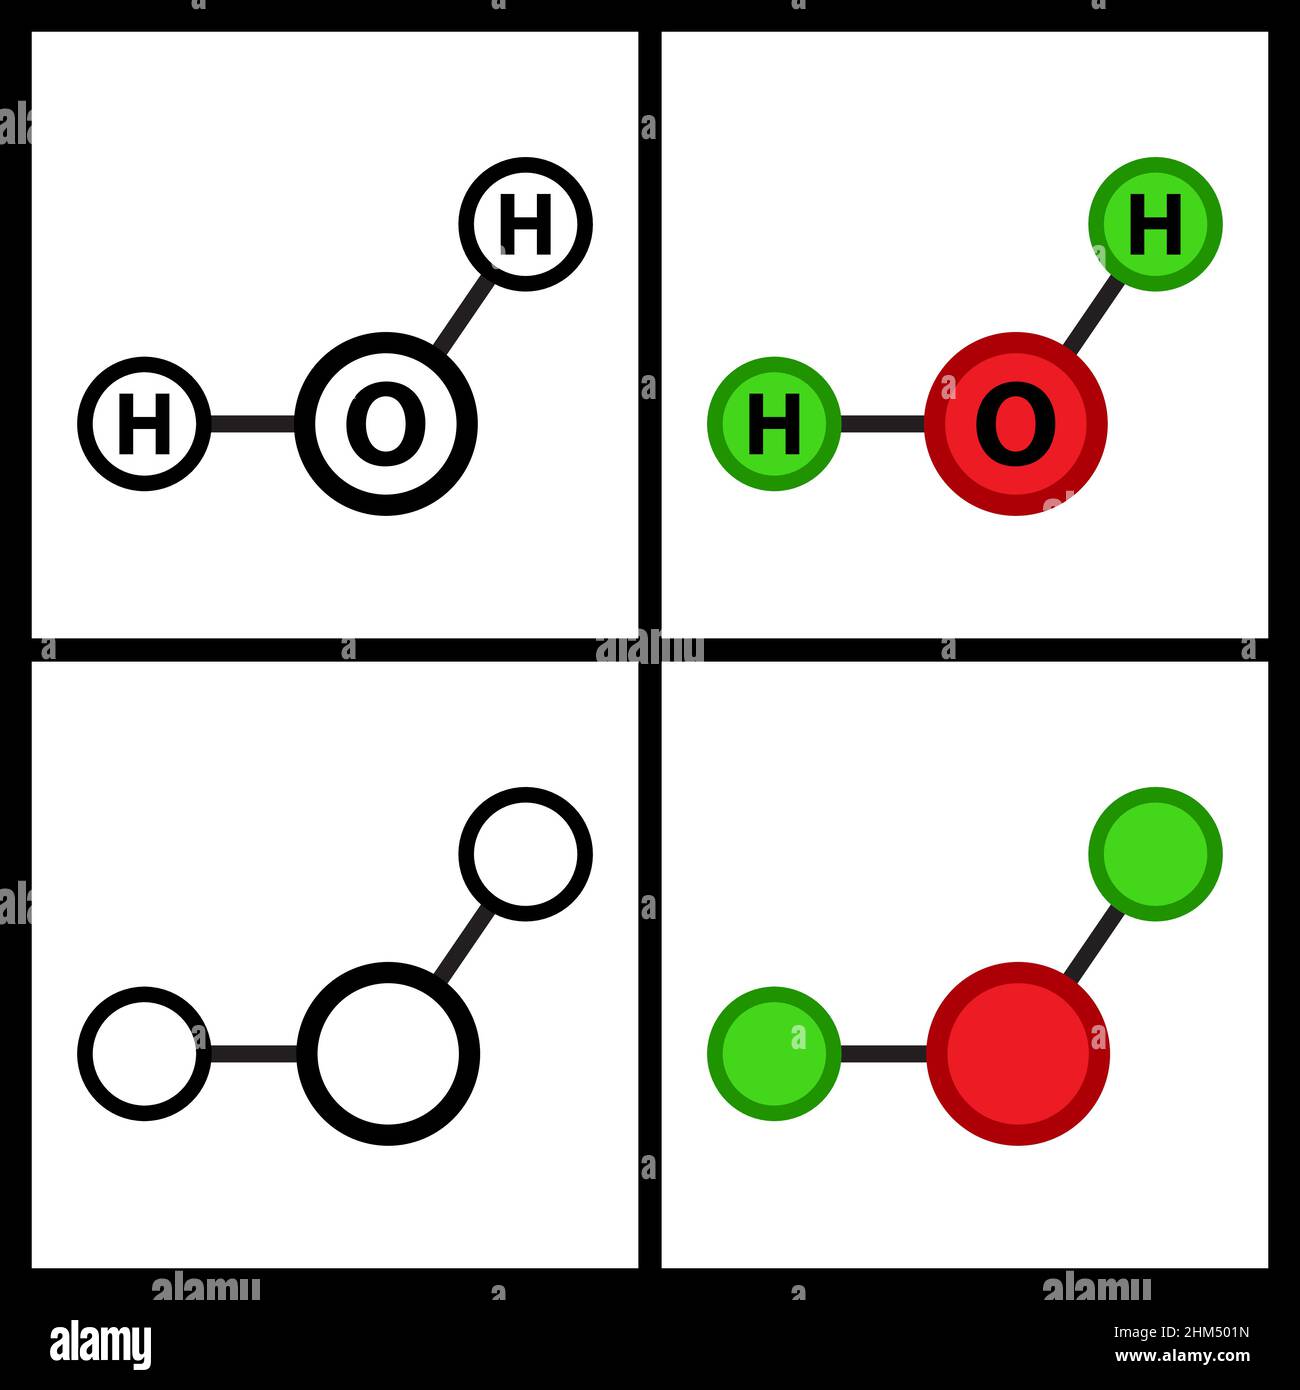 h2o water molecule structure. Liquid aqua atom formula. Vector illustration isolated on white background. Stock Vector